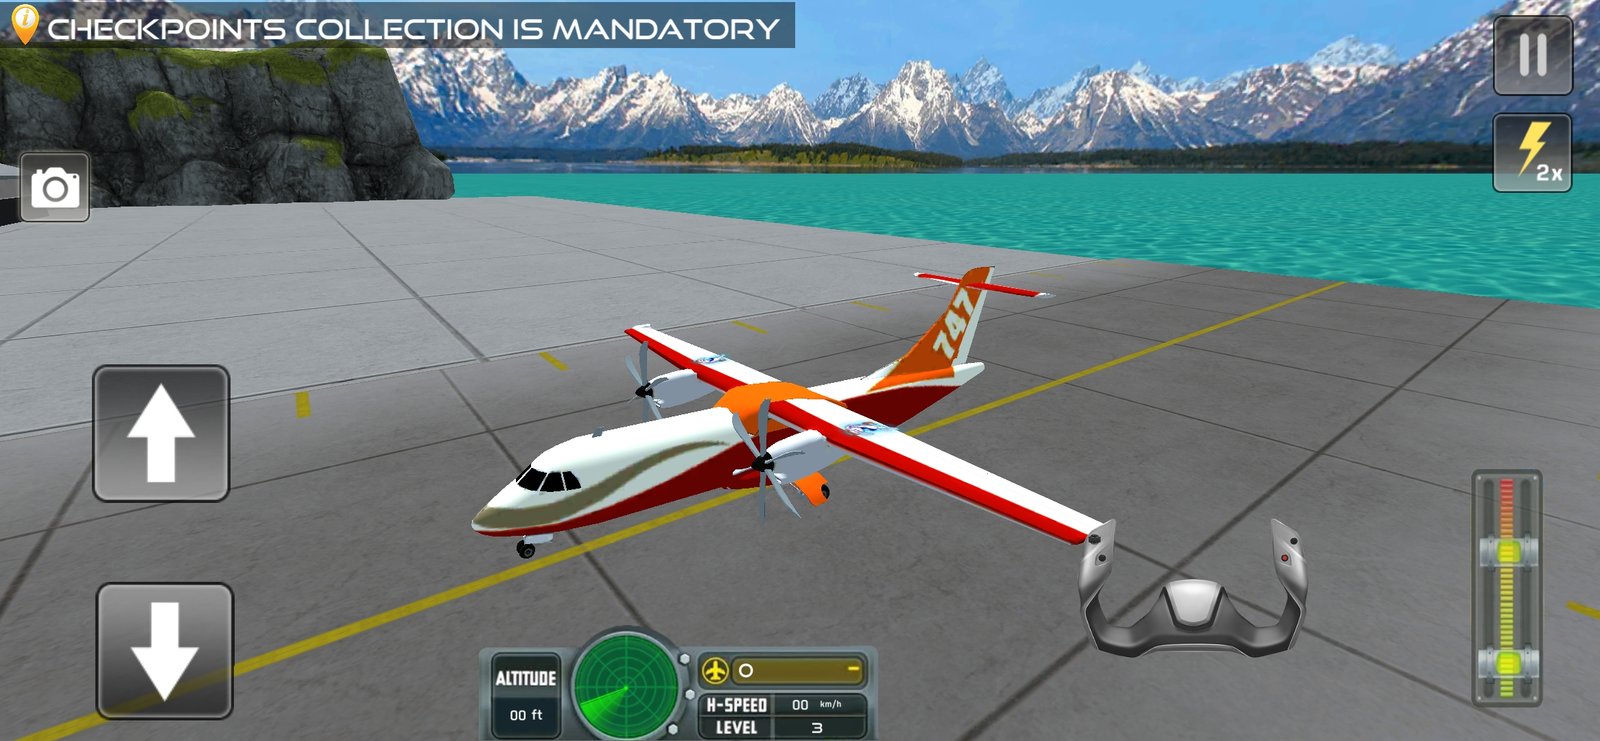 Flight Simulator : Plane Games Mod apk [Unlimited money][Free purchase]  download - Flight Simulator : Plane Games MOD apk 2.2 free for Android.